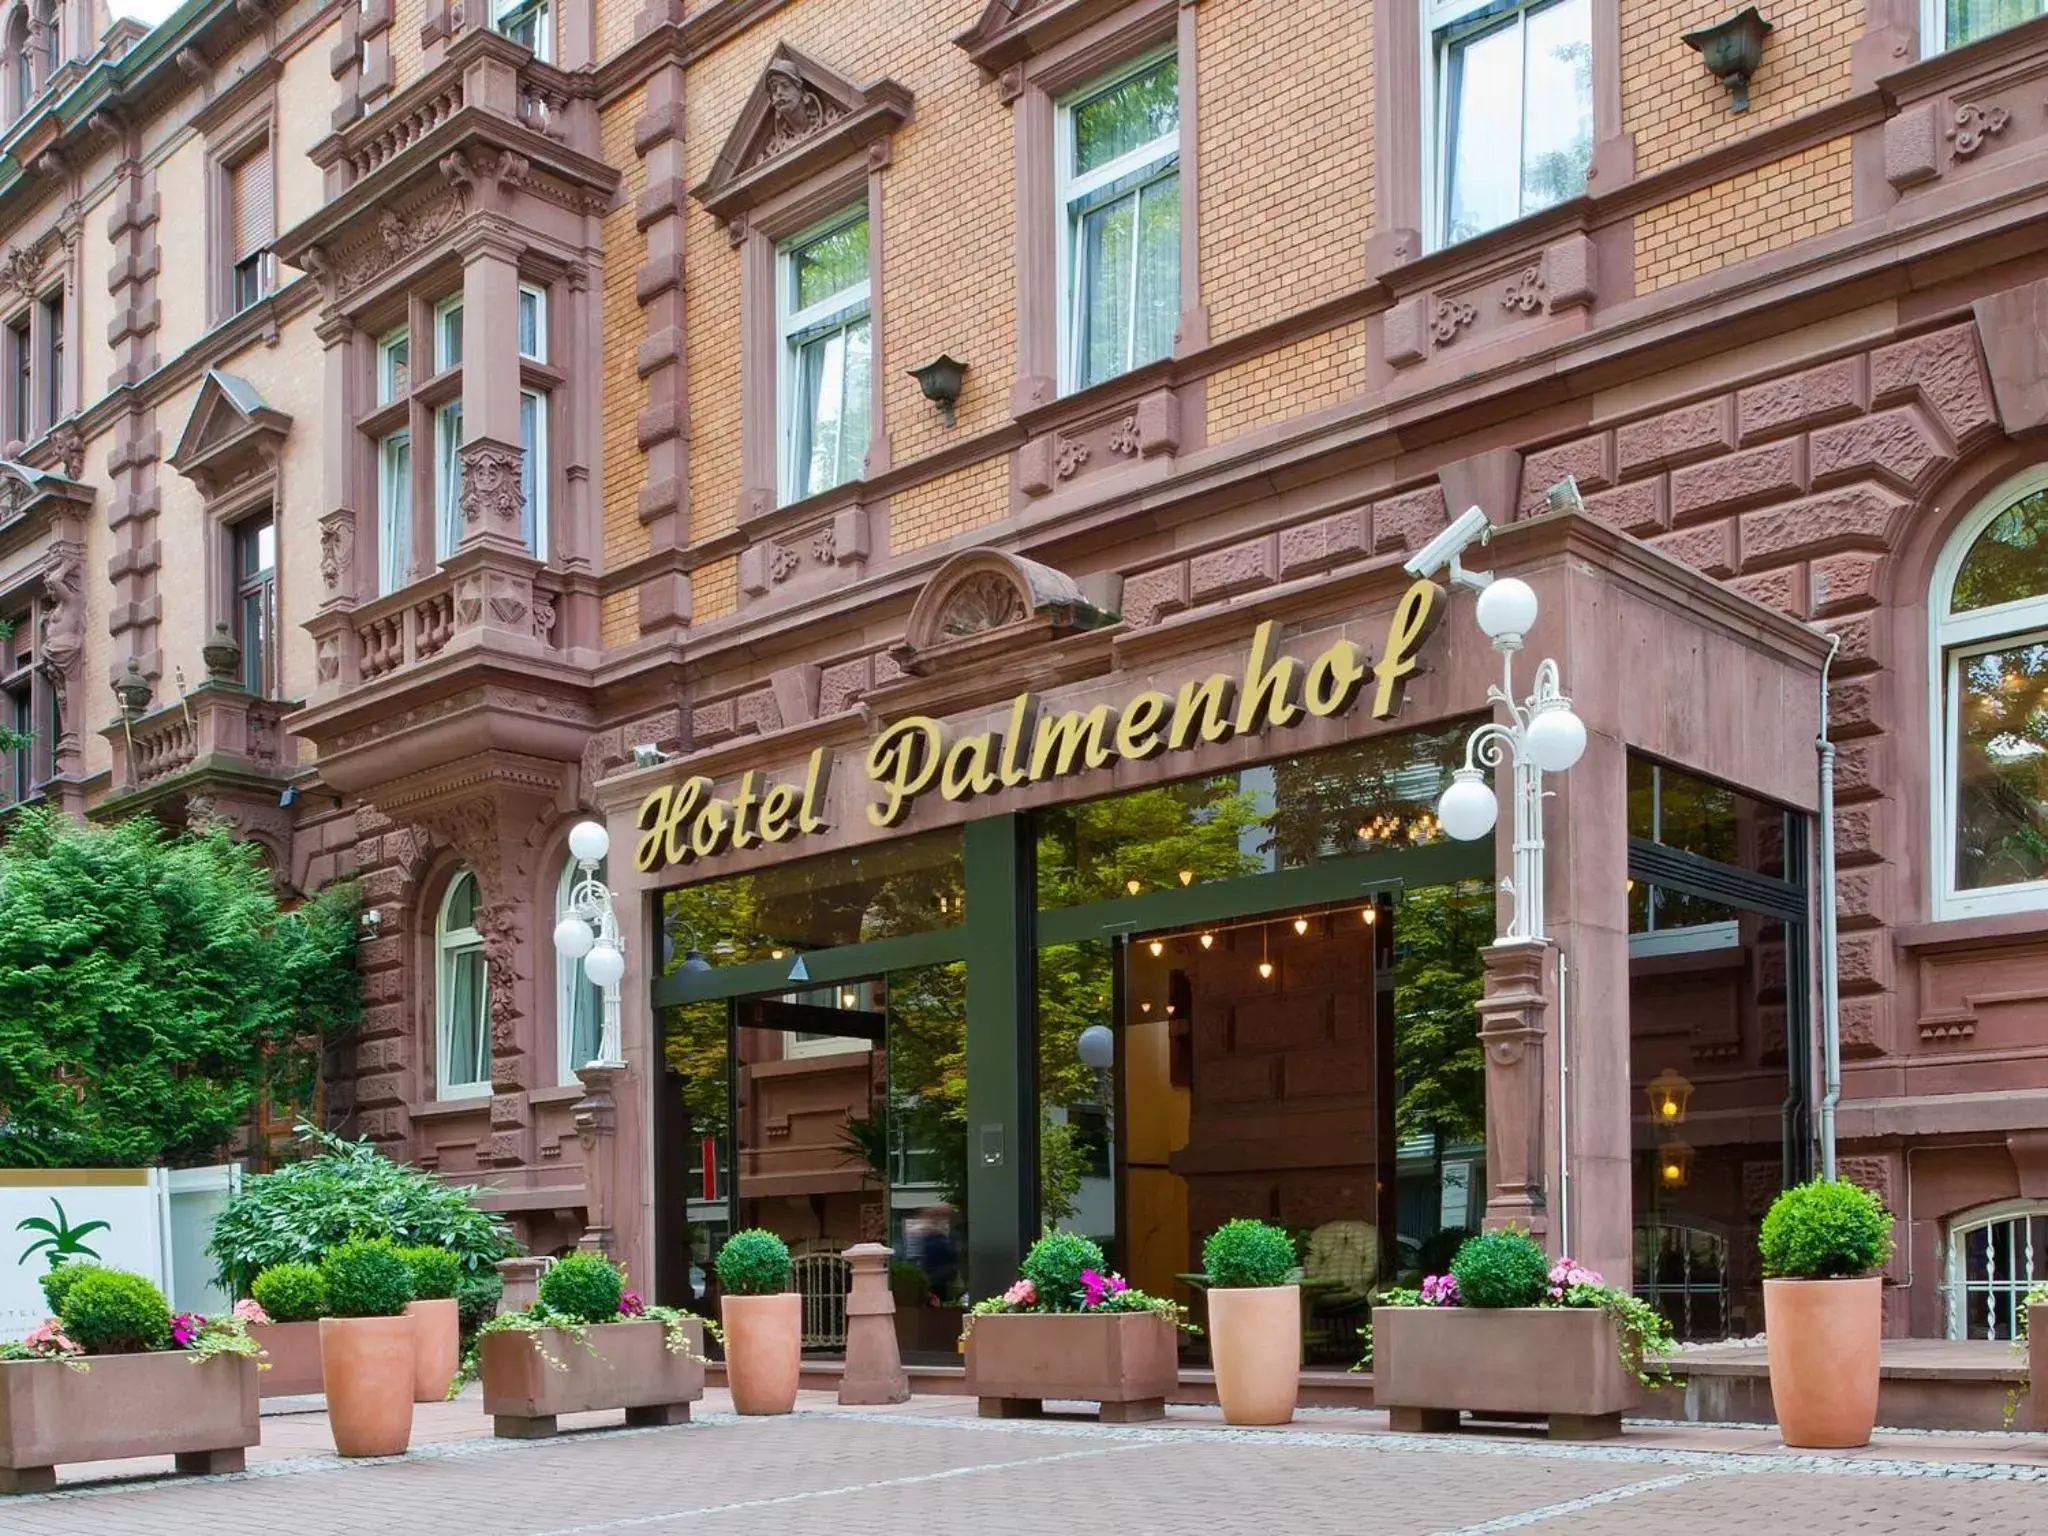 Facade/entrance in Hotel Palmenhof